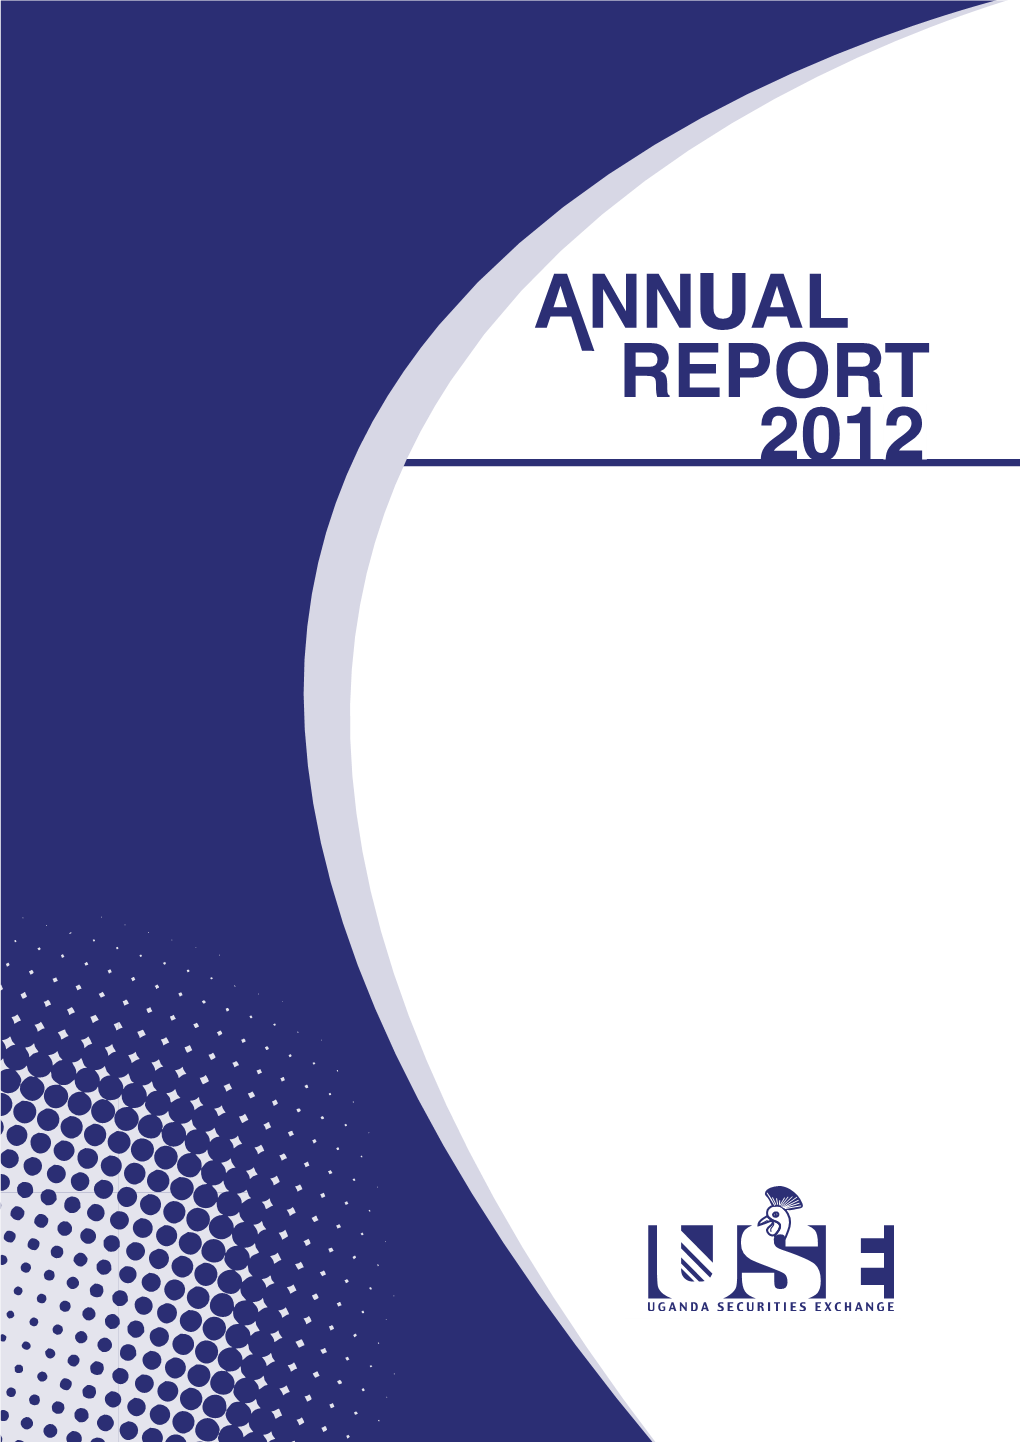 REPORT 20132 Listing of Uganda Security Exchange at Kampala Serena Hotel